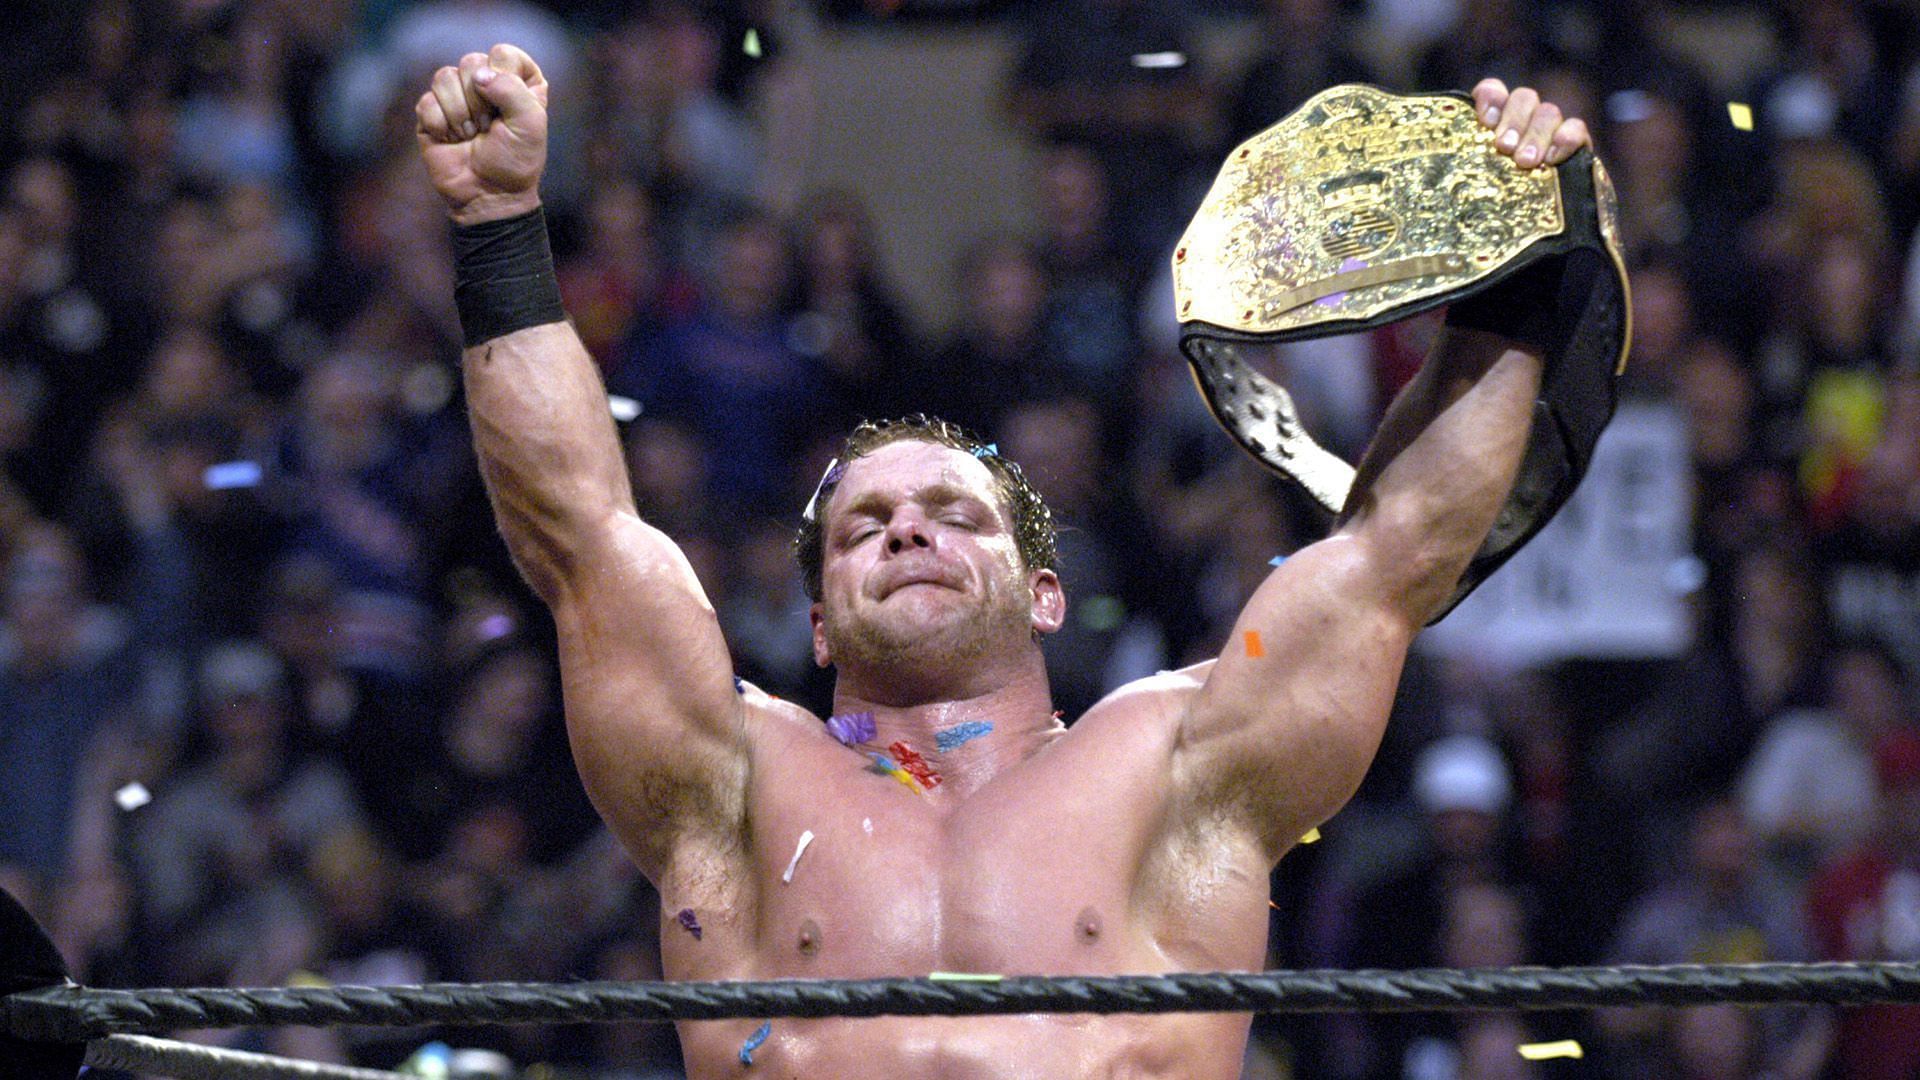 Chris Benoit celebrates with the WWE World Heavyweight Title